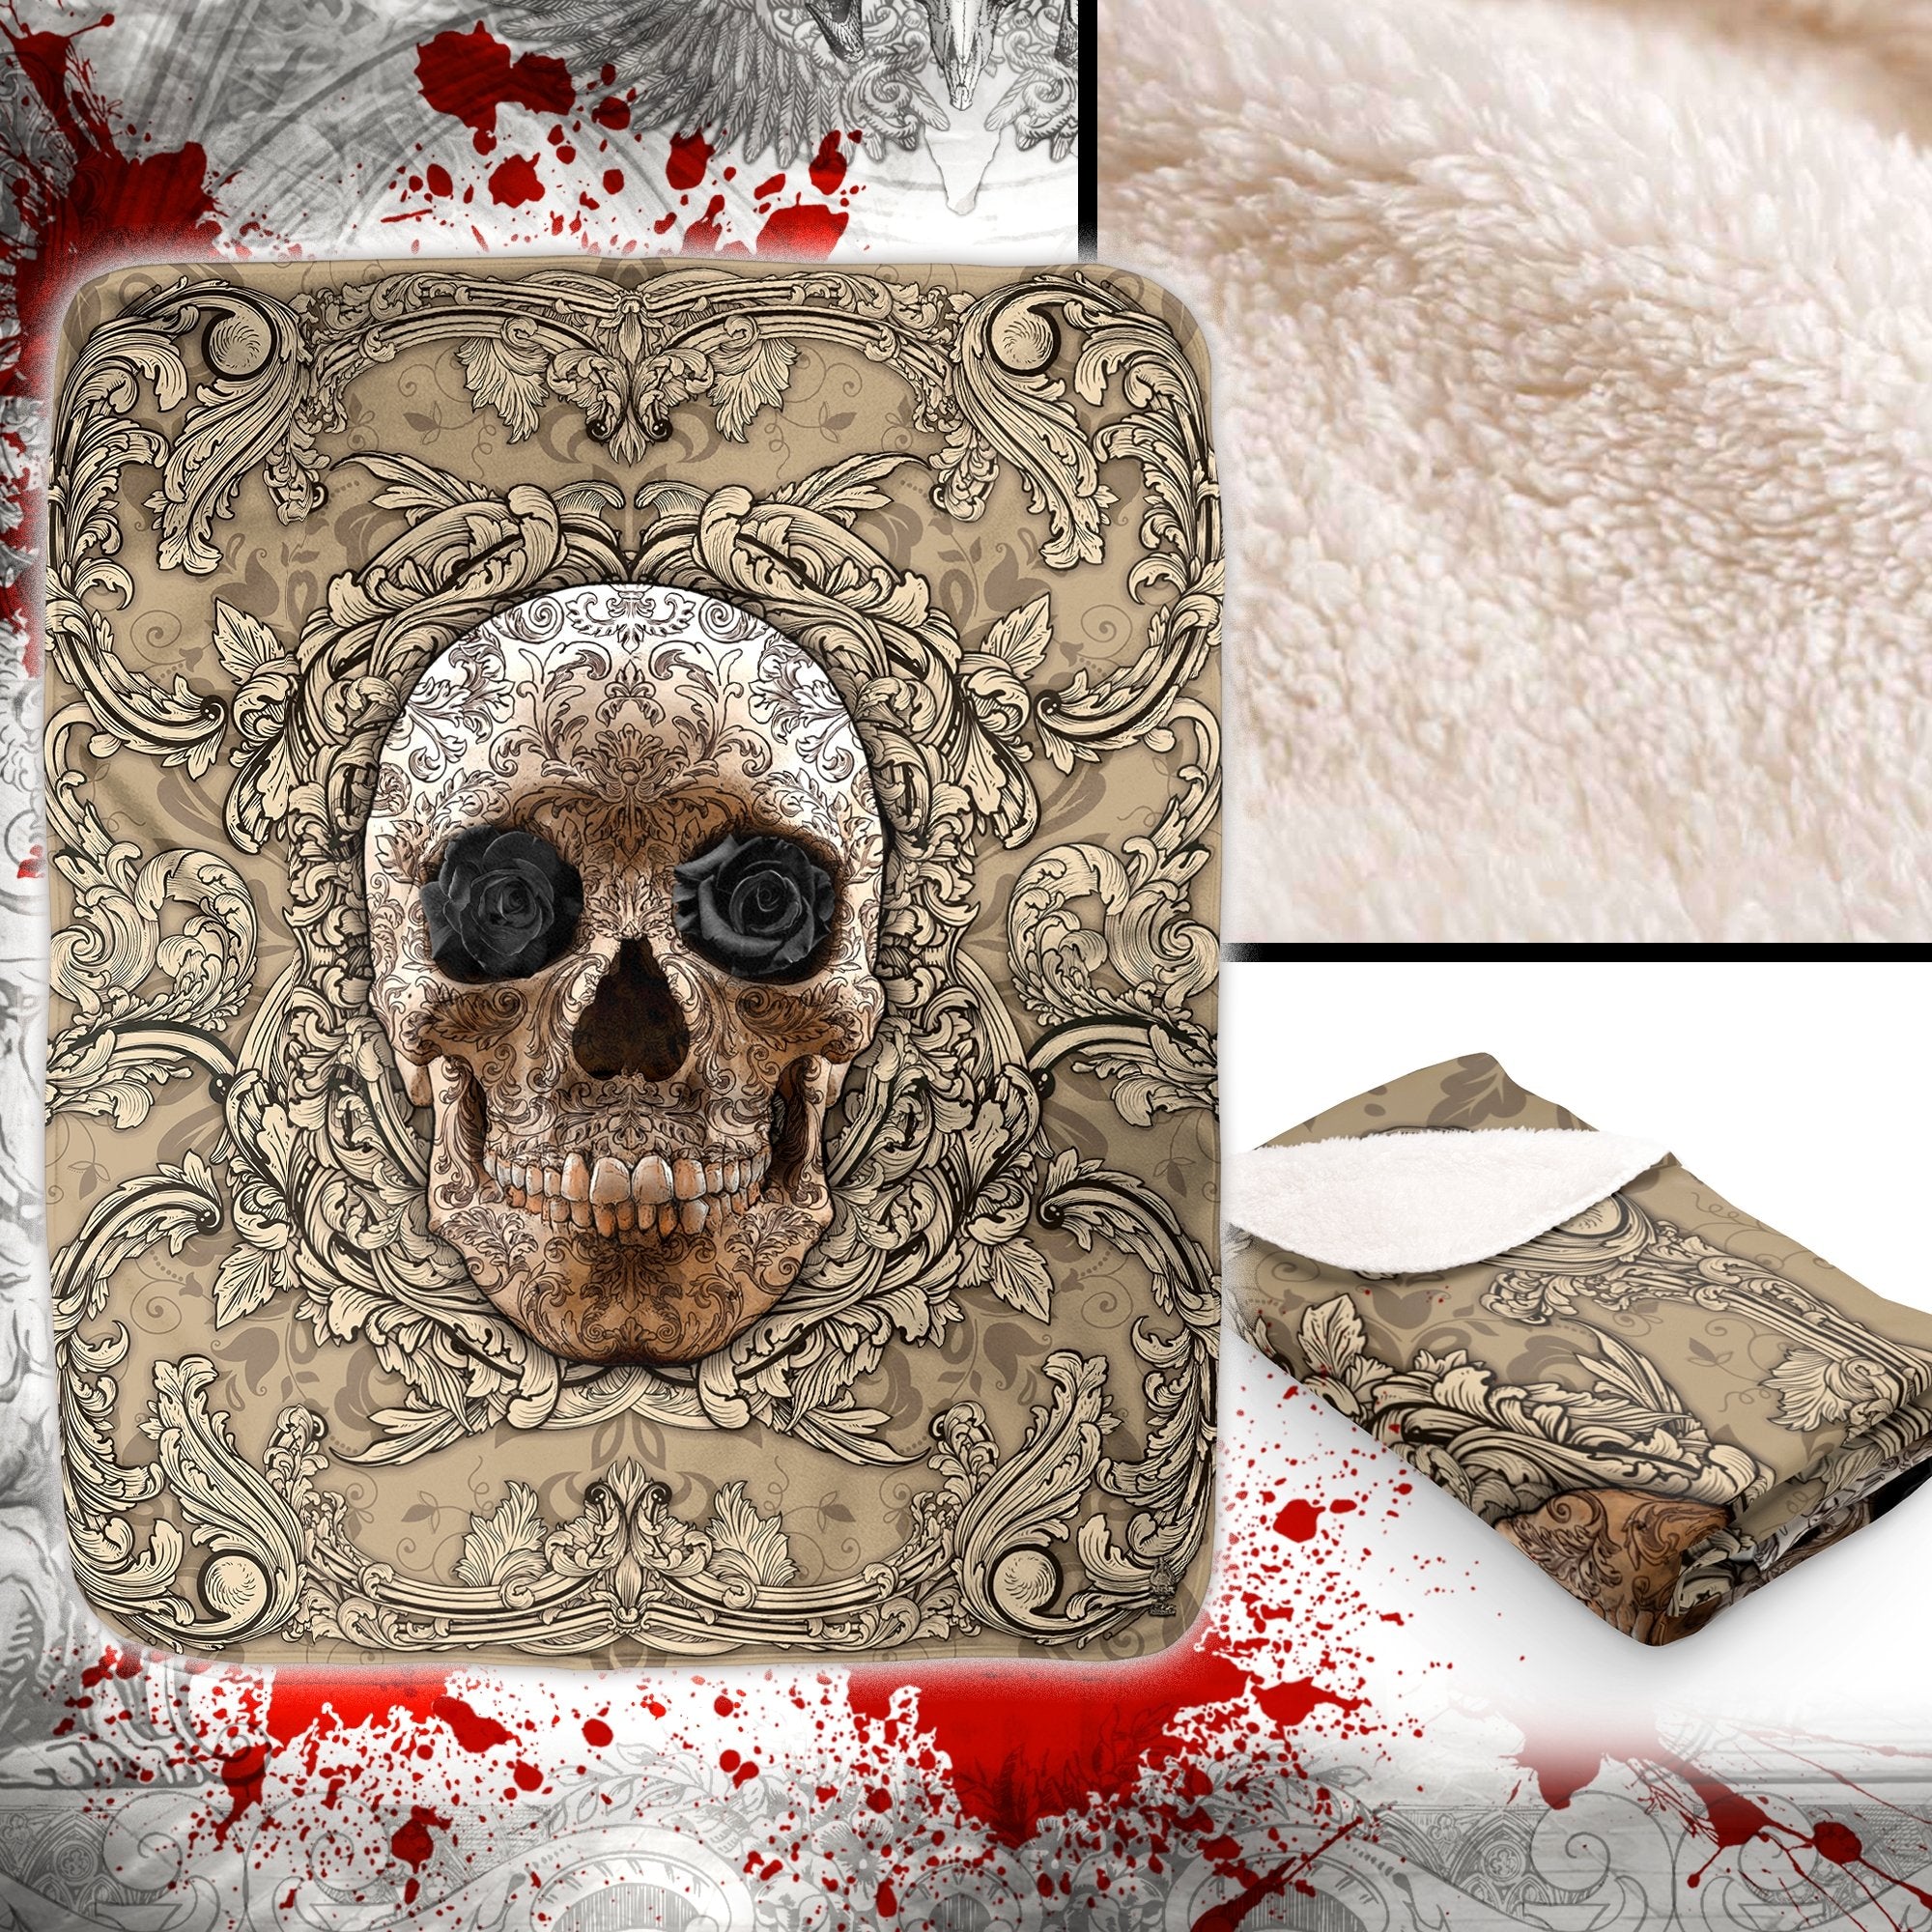 Skull Throw Fleece Blanket, Macabre Art, Alternative Home Decor, Eclectic and Funky Gift - Cream - Abysm Internal